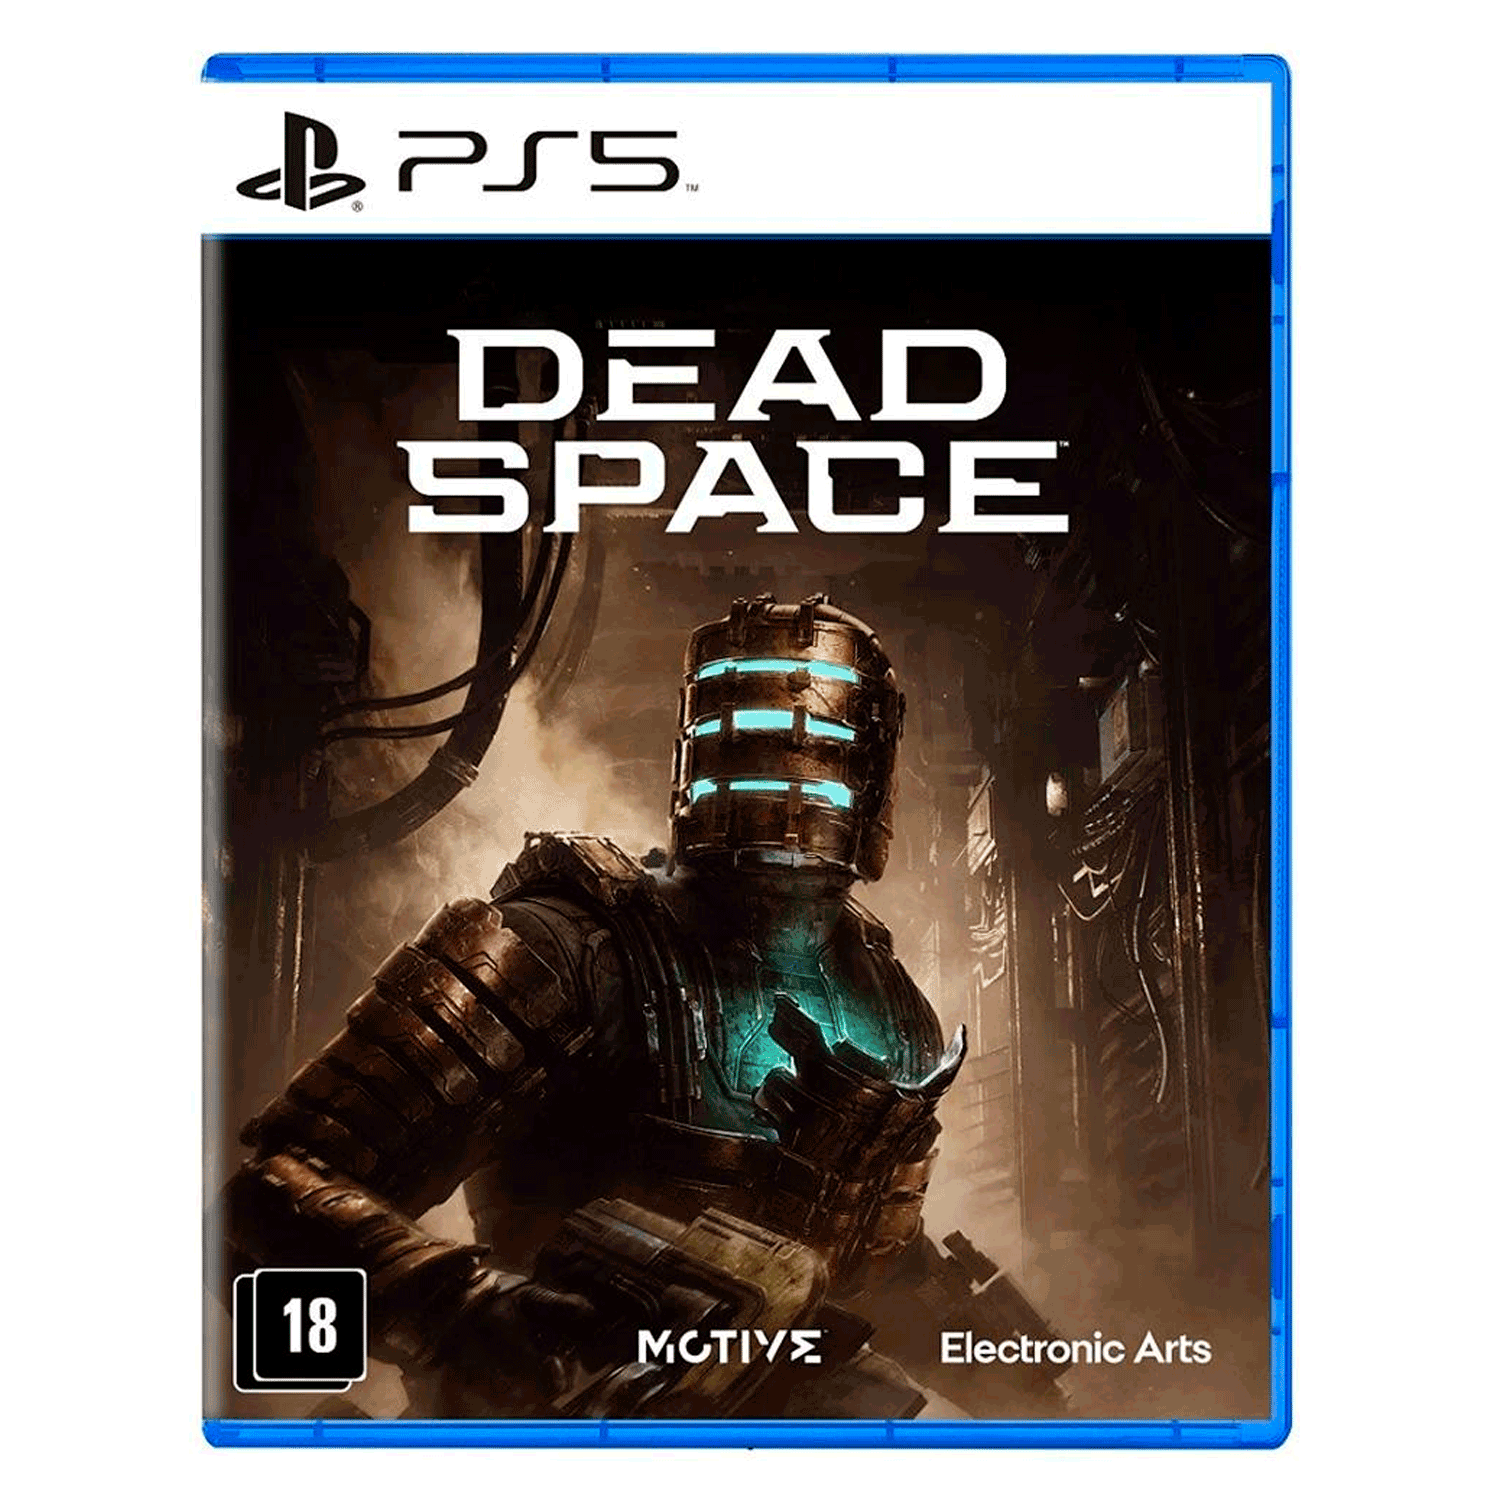 Como baixar e começar a jogar Dead Space 3 no PC e consoles